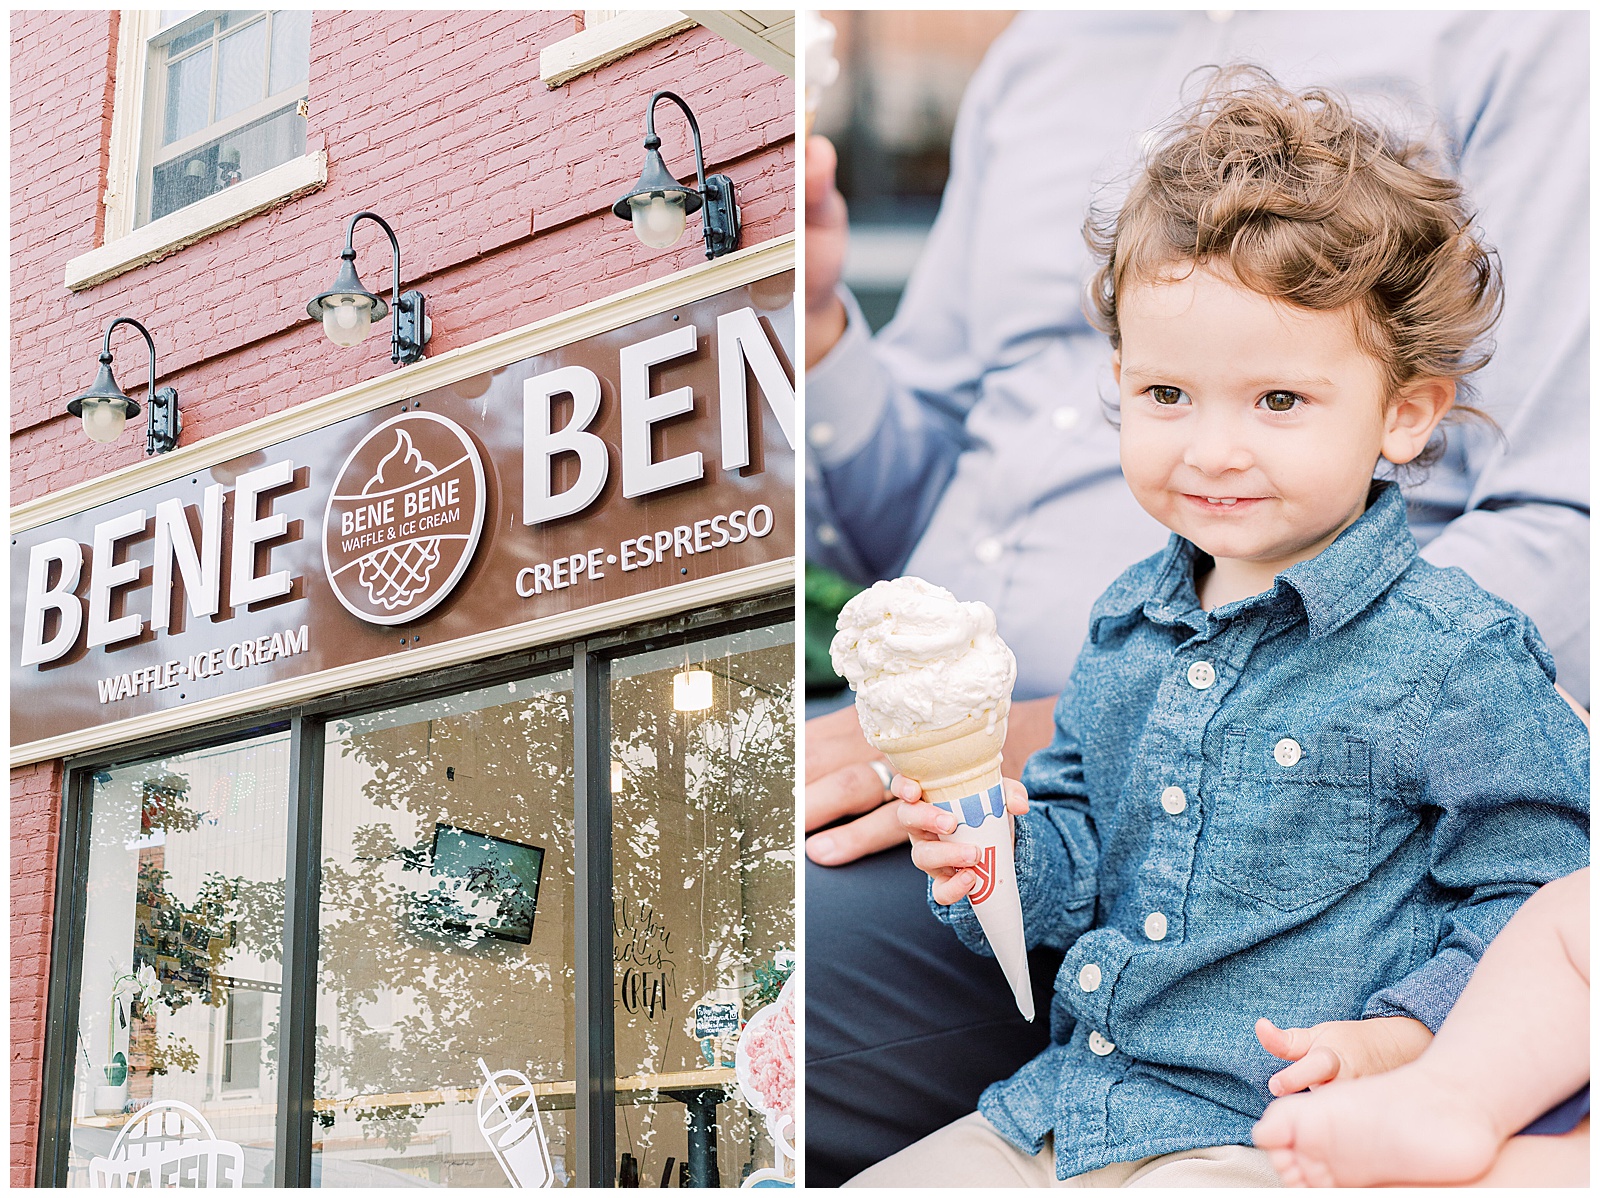 Ice Cream Parlour and small boy with big ice cream cone